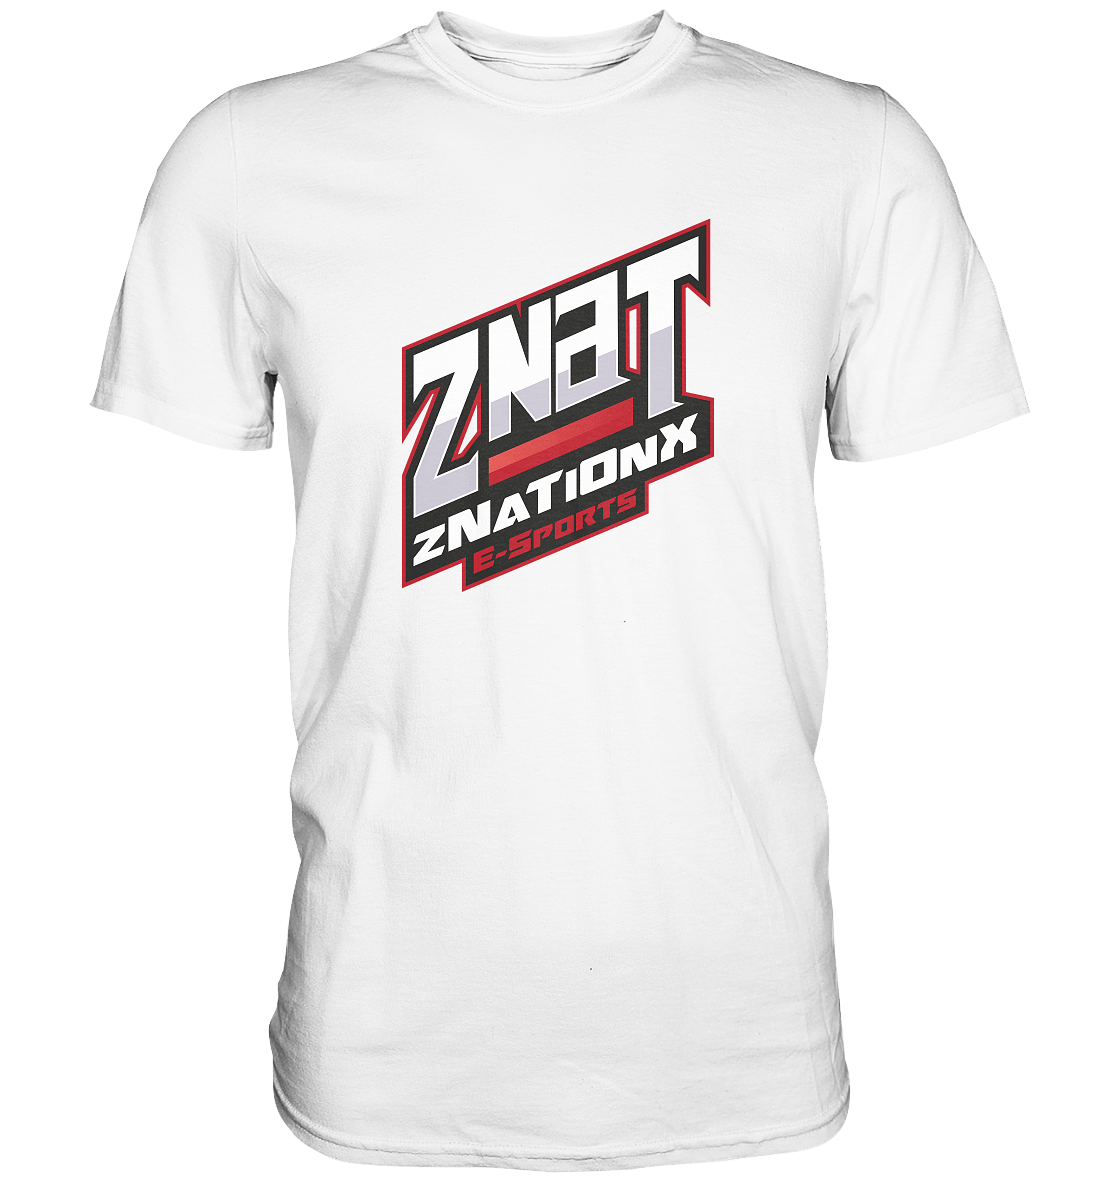 ZNATIONX E-SPORTS - Basic Shirt